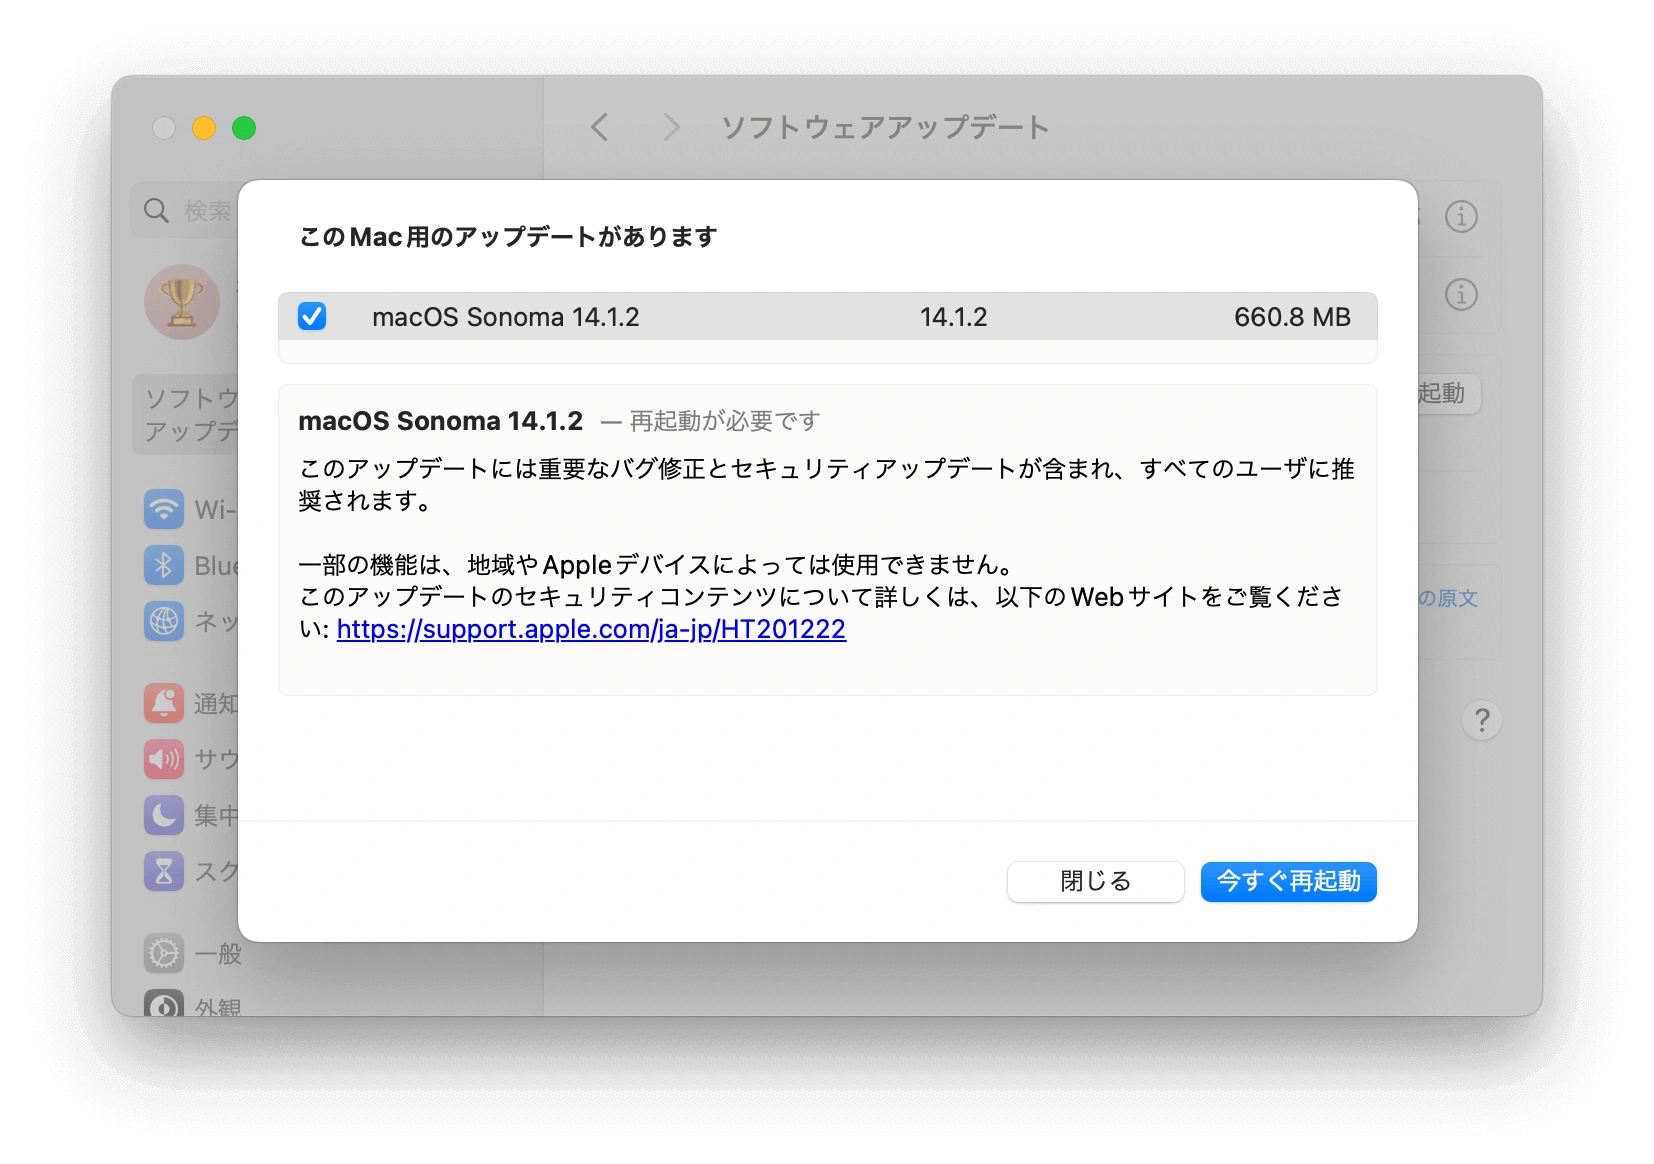 macOSの新バージョン